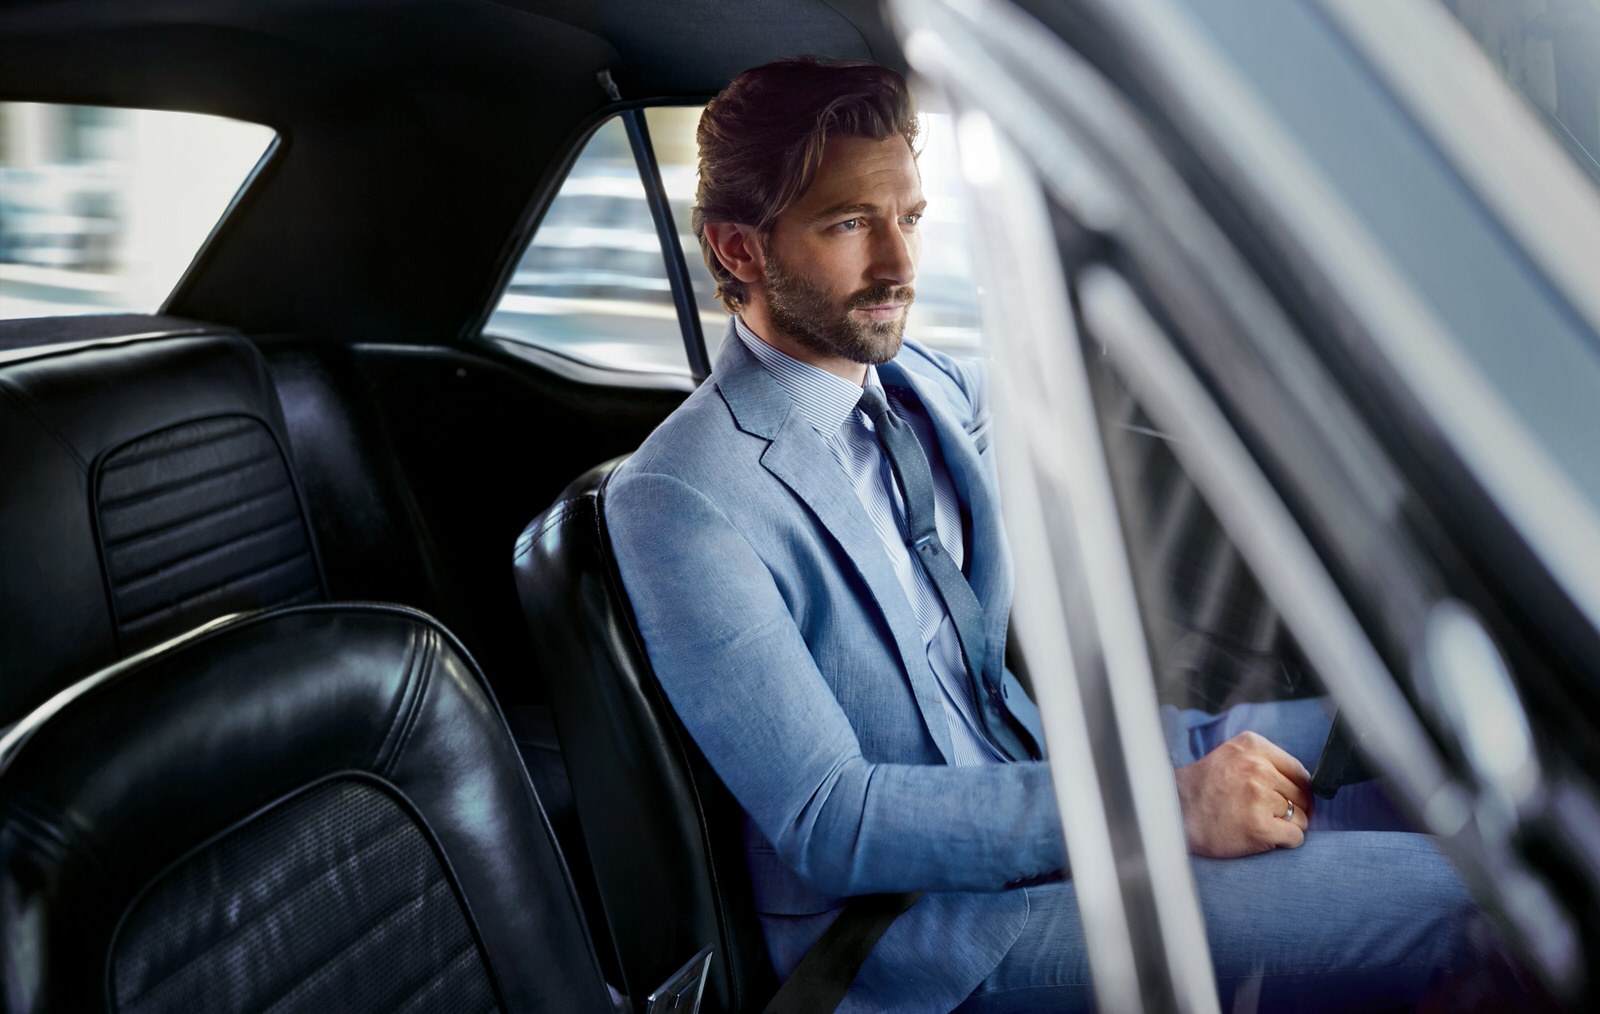 tailor made suits Dubai by Lapels Bespoke